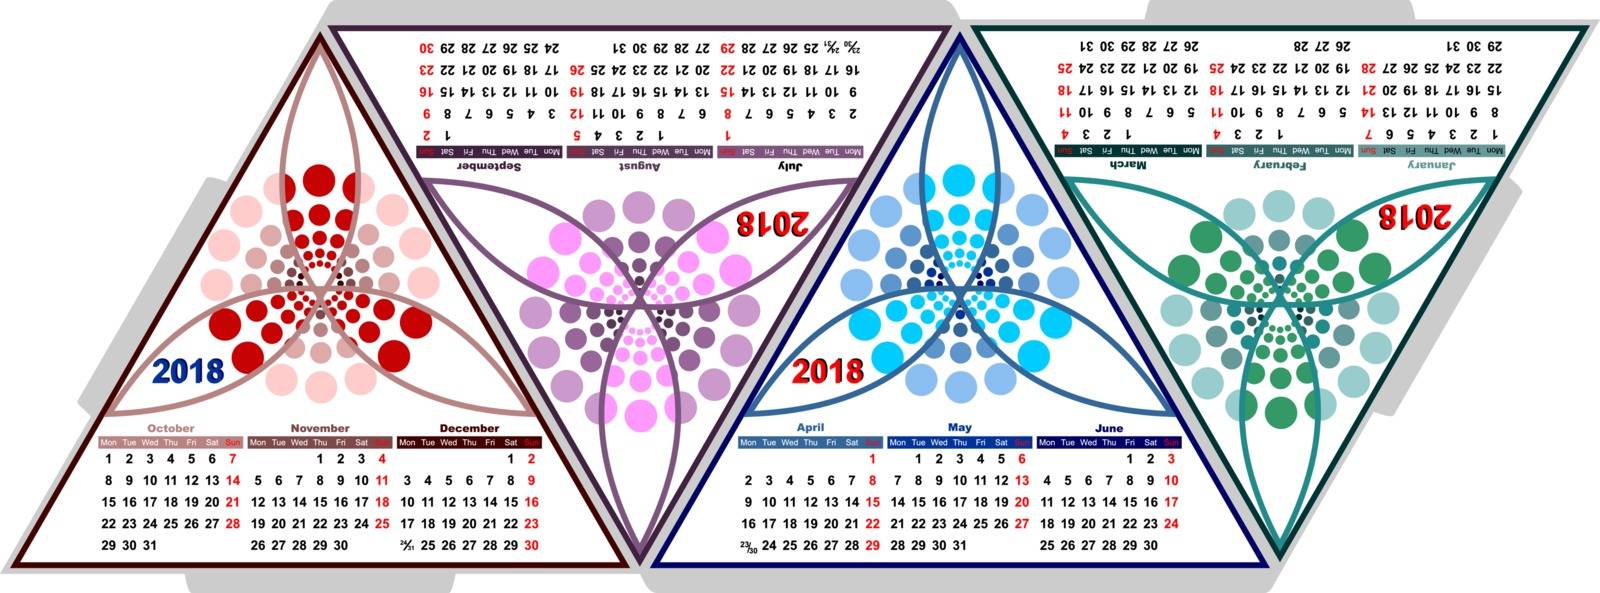 The model of the volumetric triangular calendar